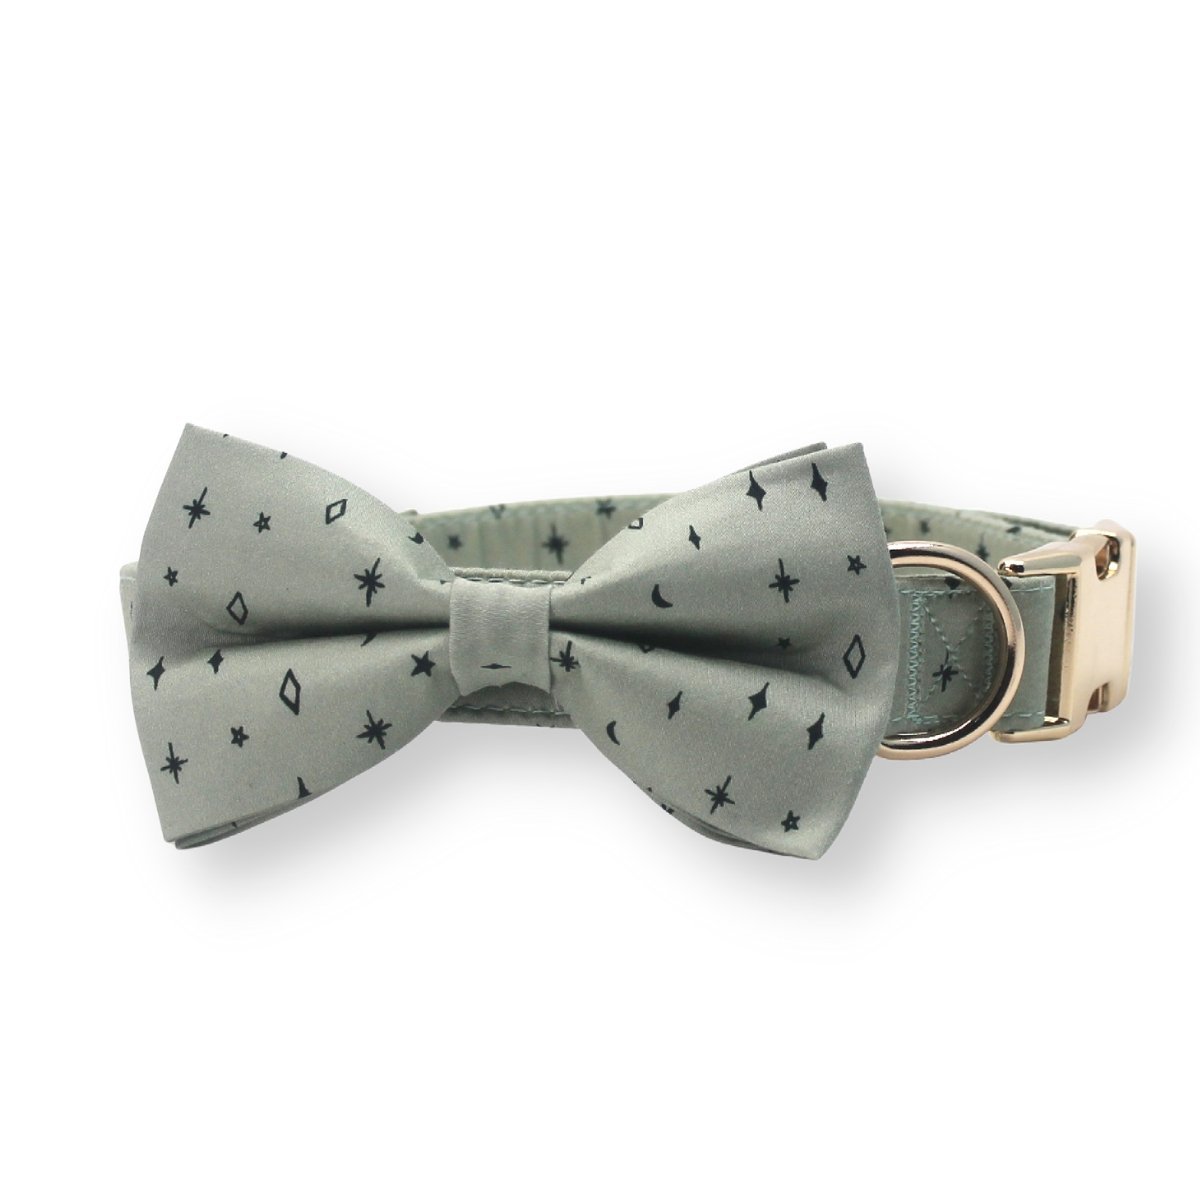 designer dog collars for boys and girls - best dog collar